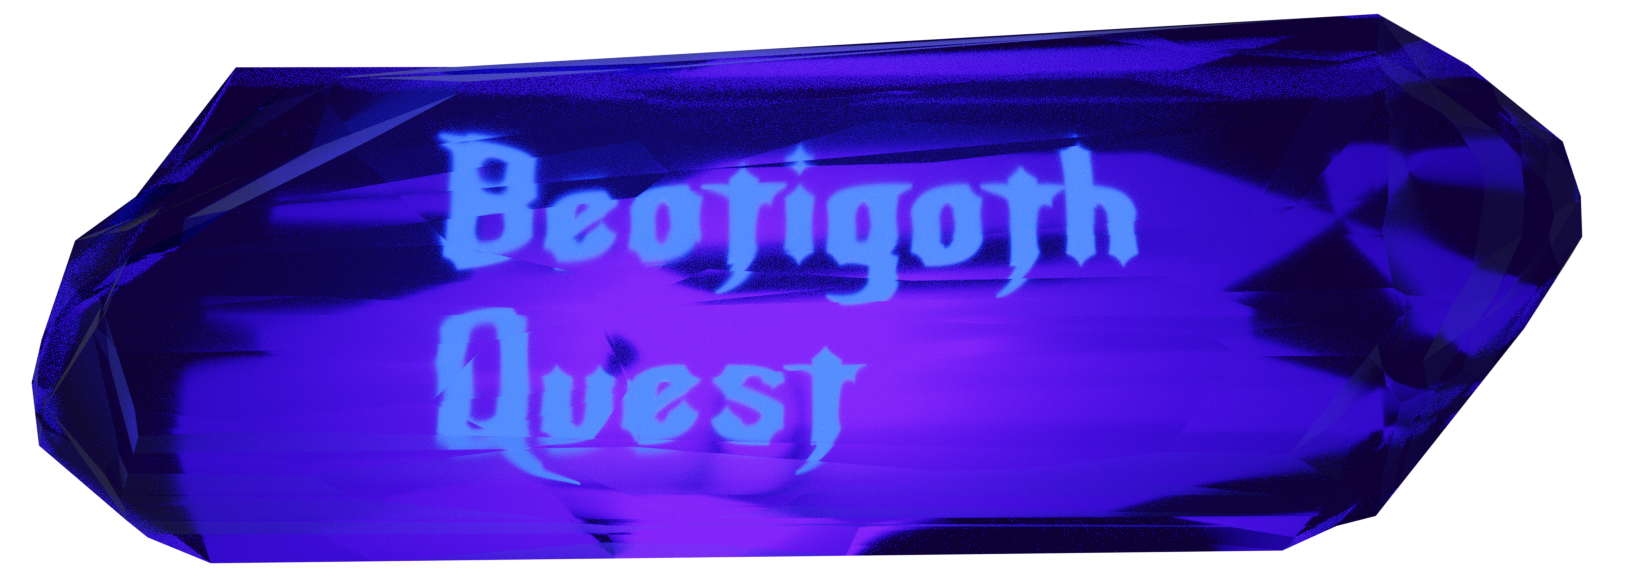 Beotigoth Quest